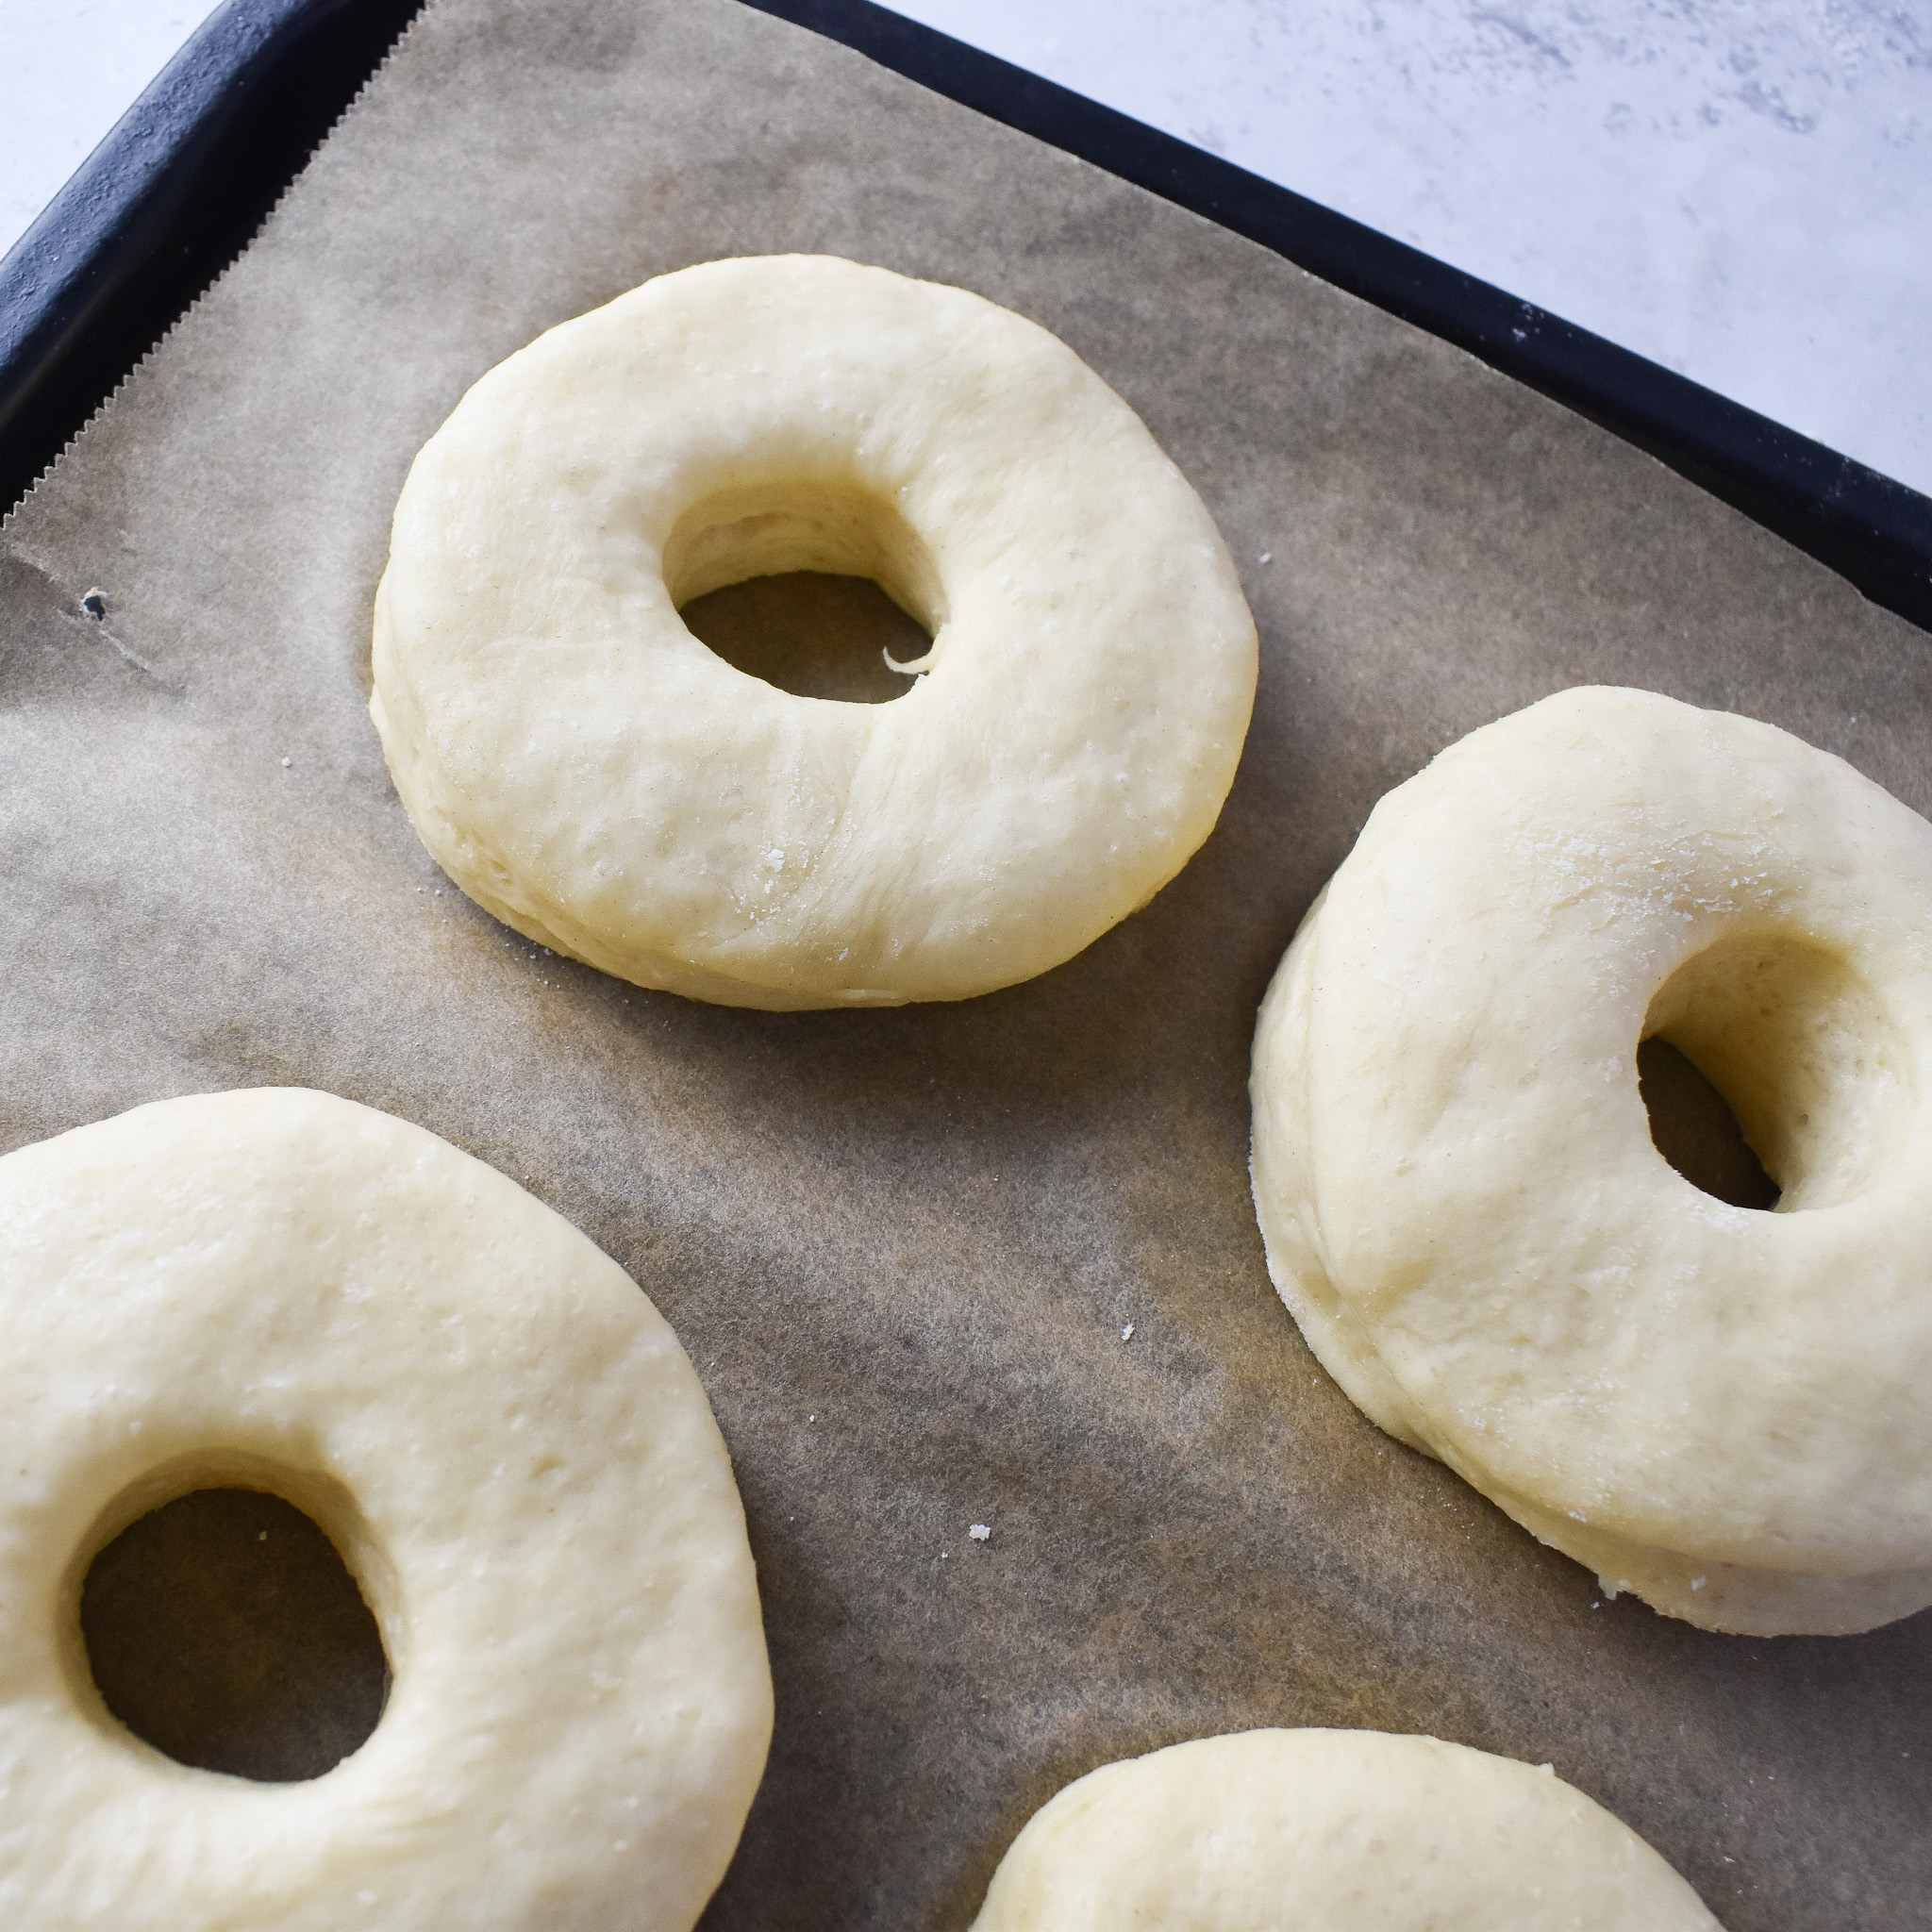 risen shaped doughnuts